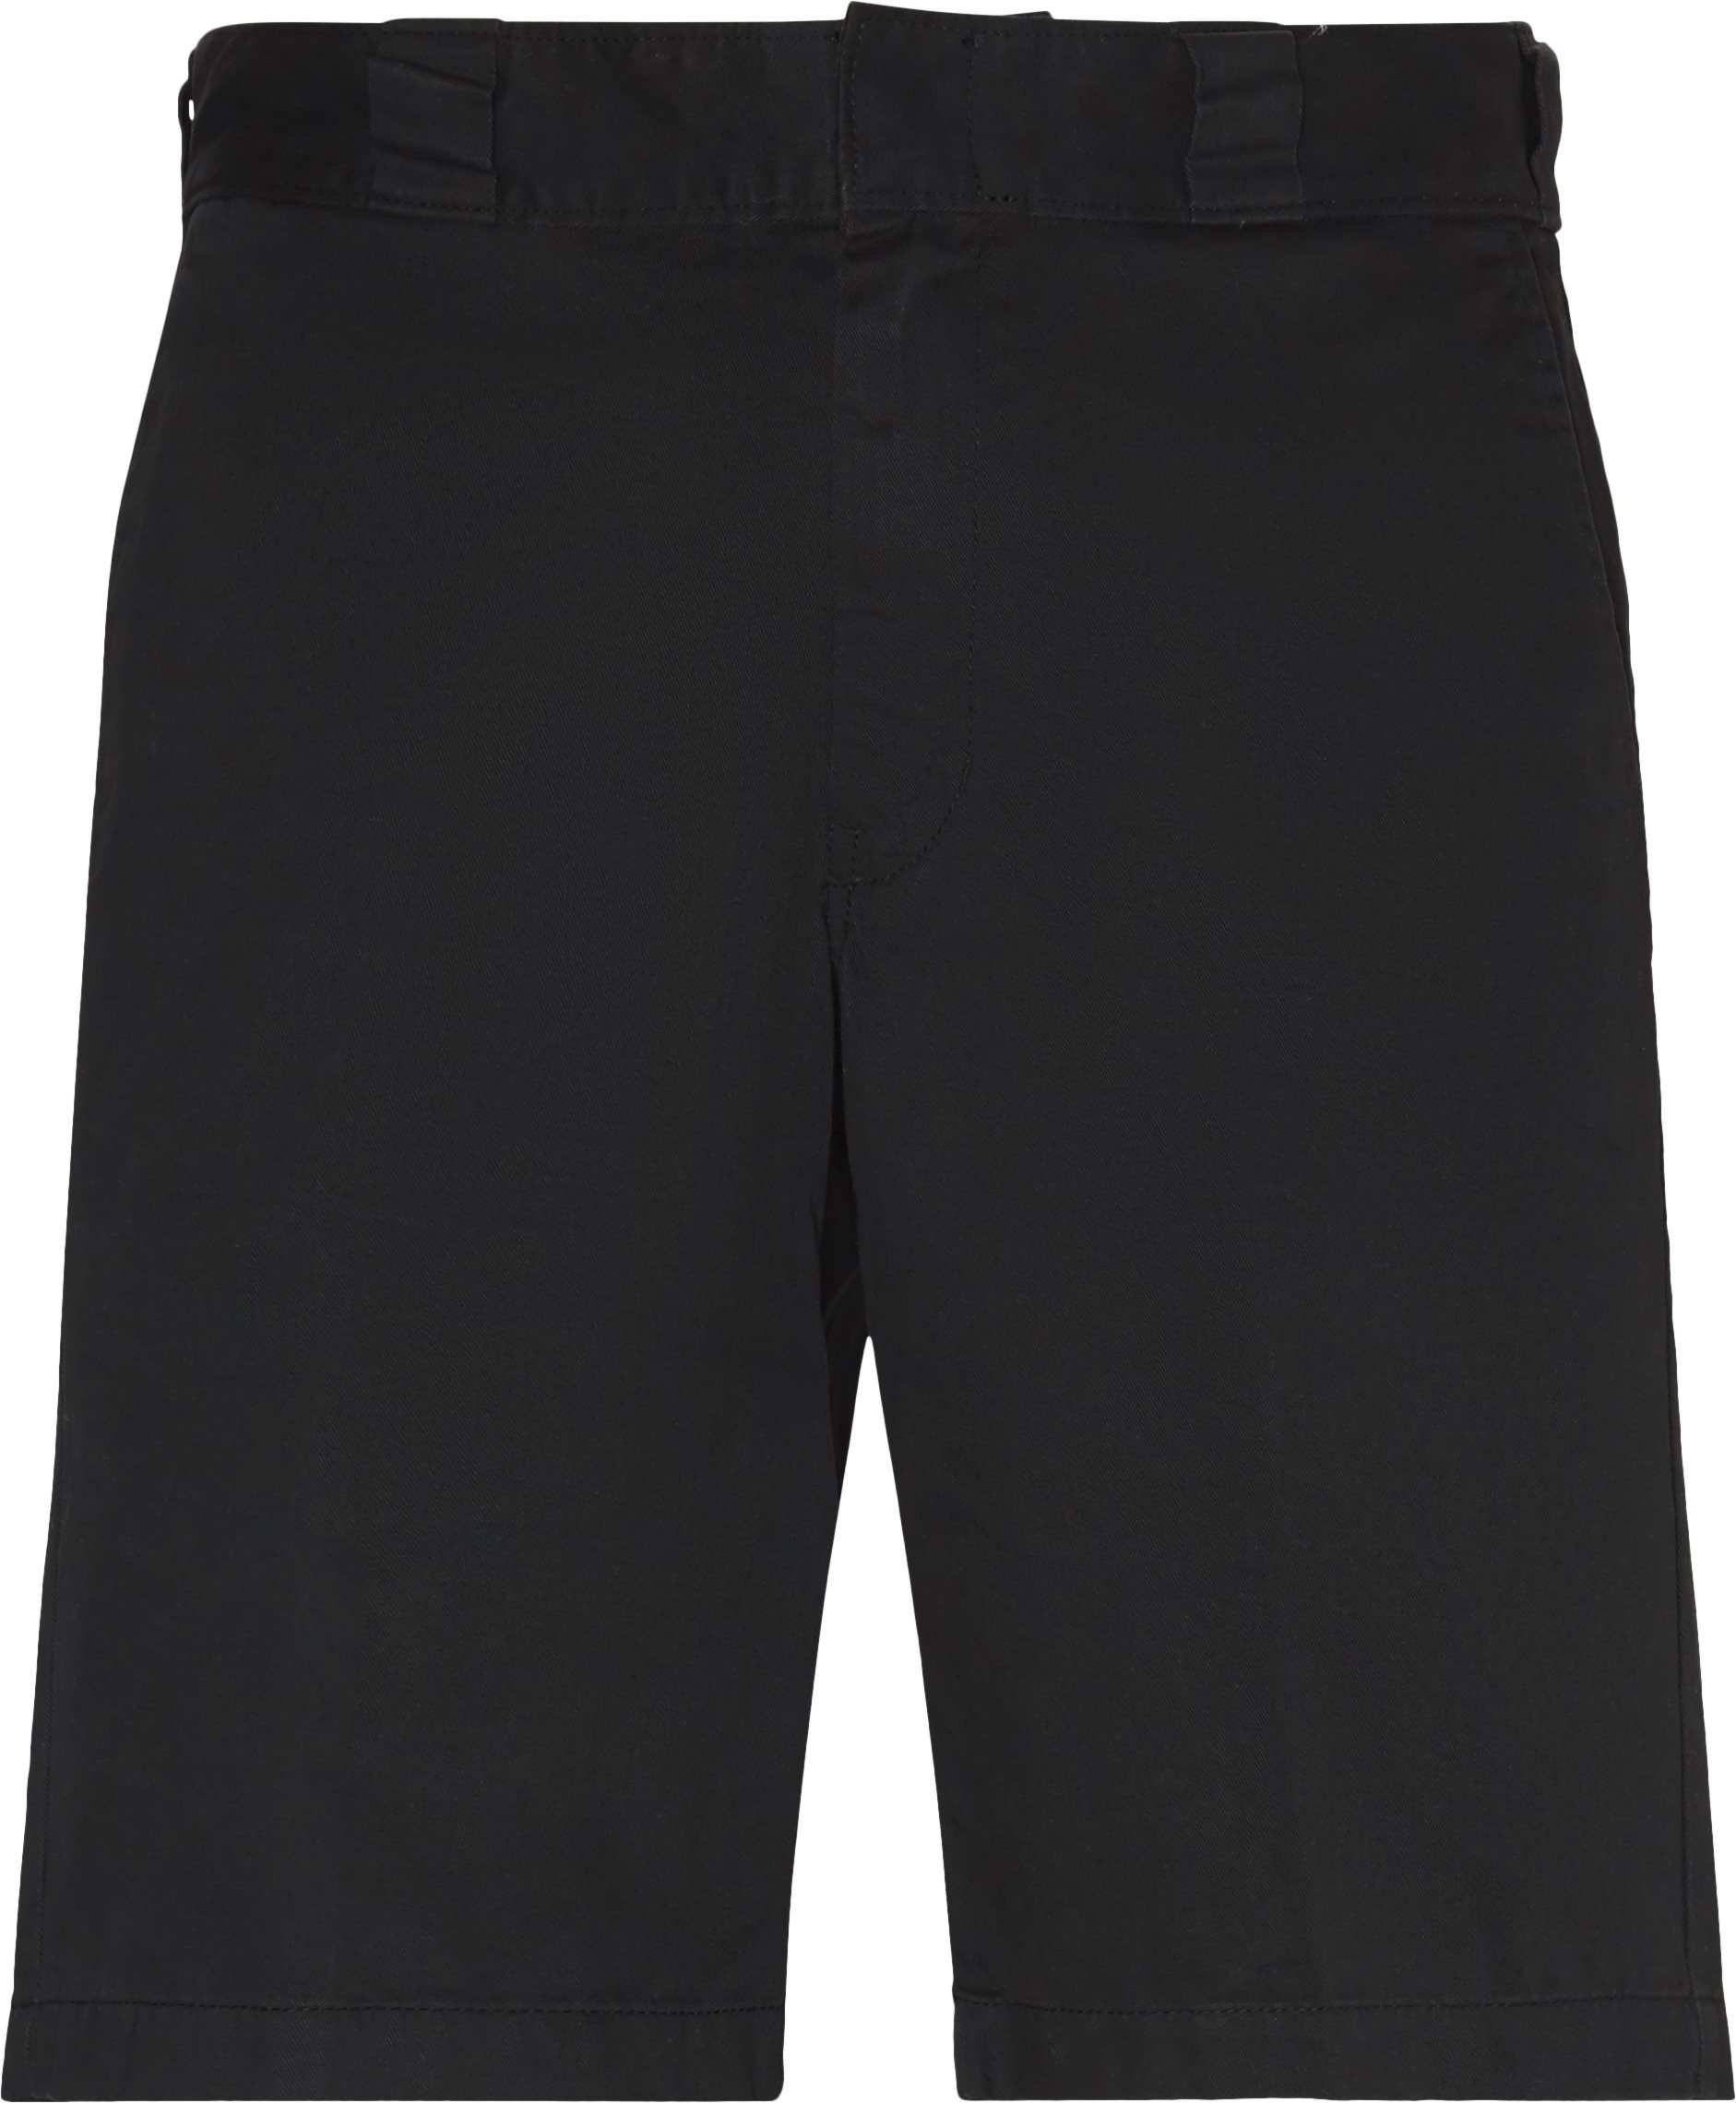 Vancleve Shorts - Shorts - Regular fit - Svart